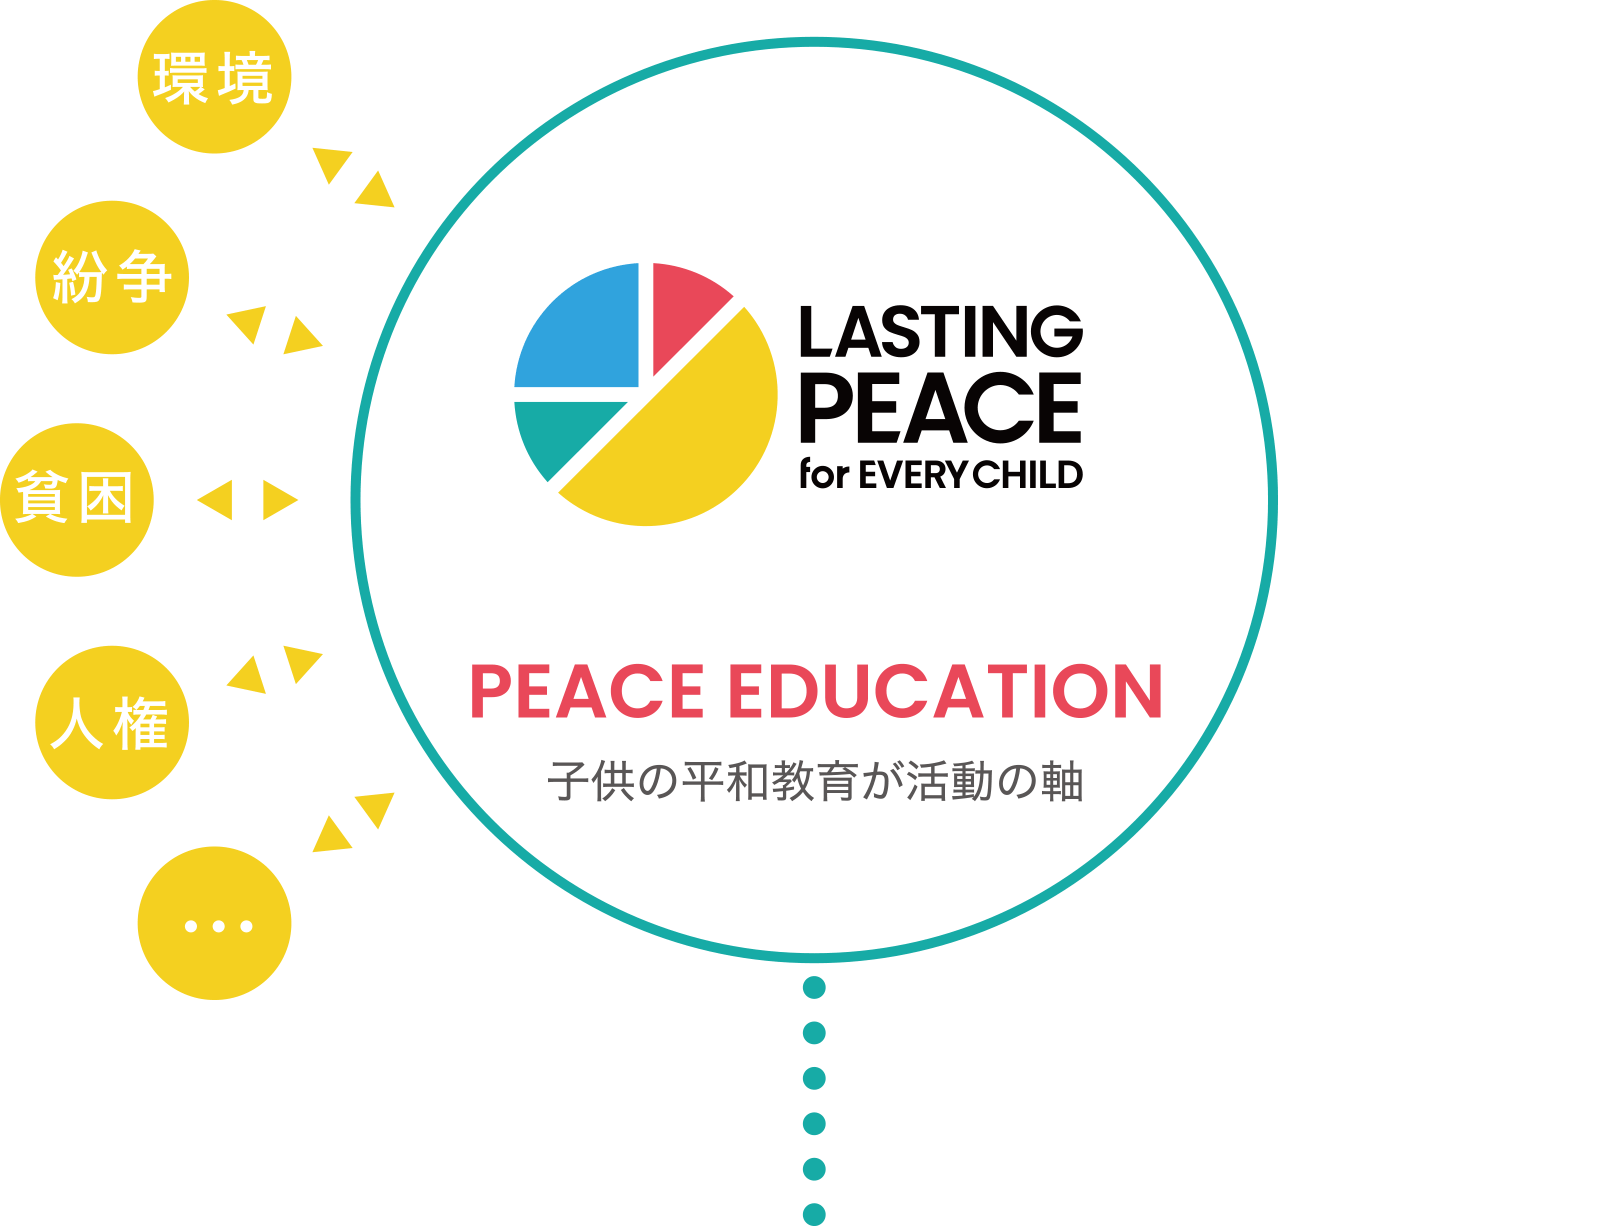 PEACE EDUCATION 子供の平和教育が活動の軸